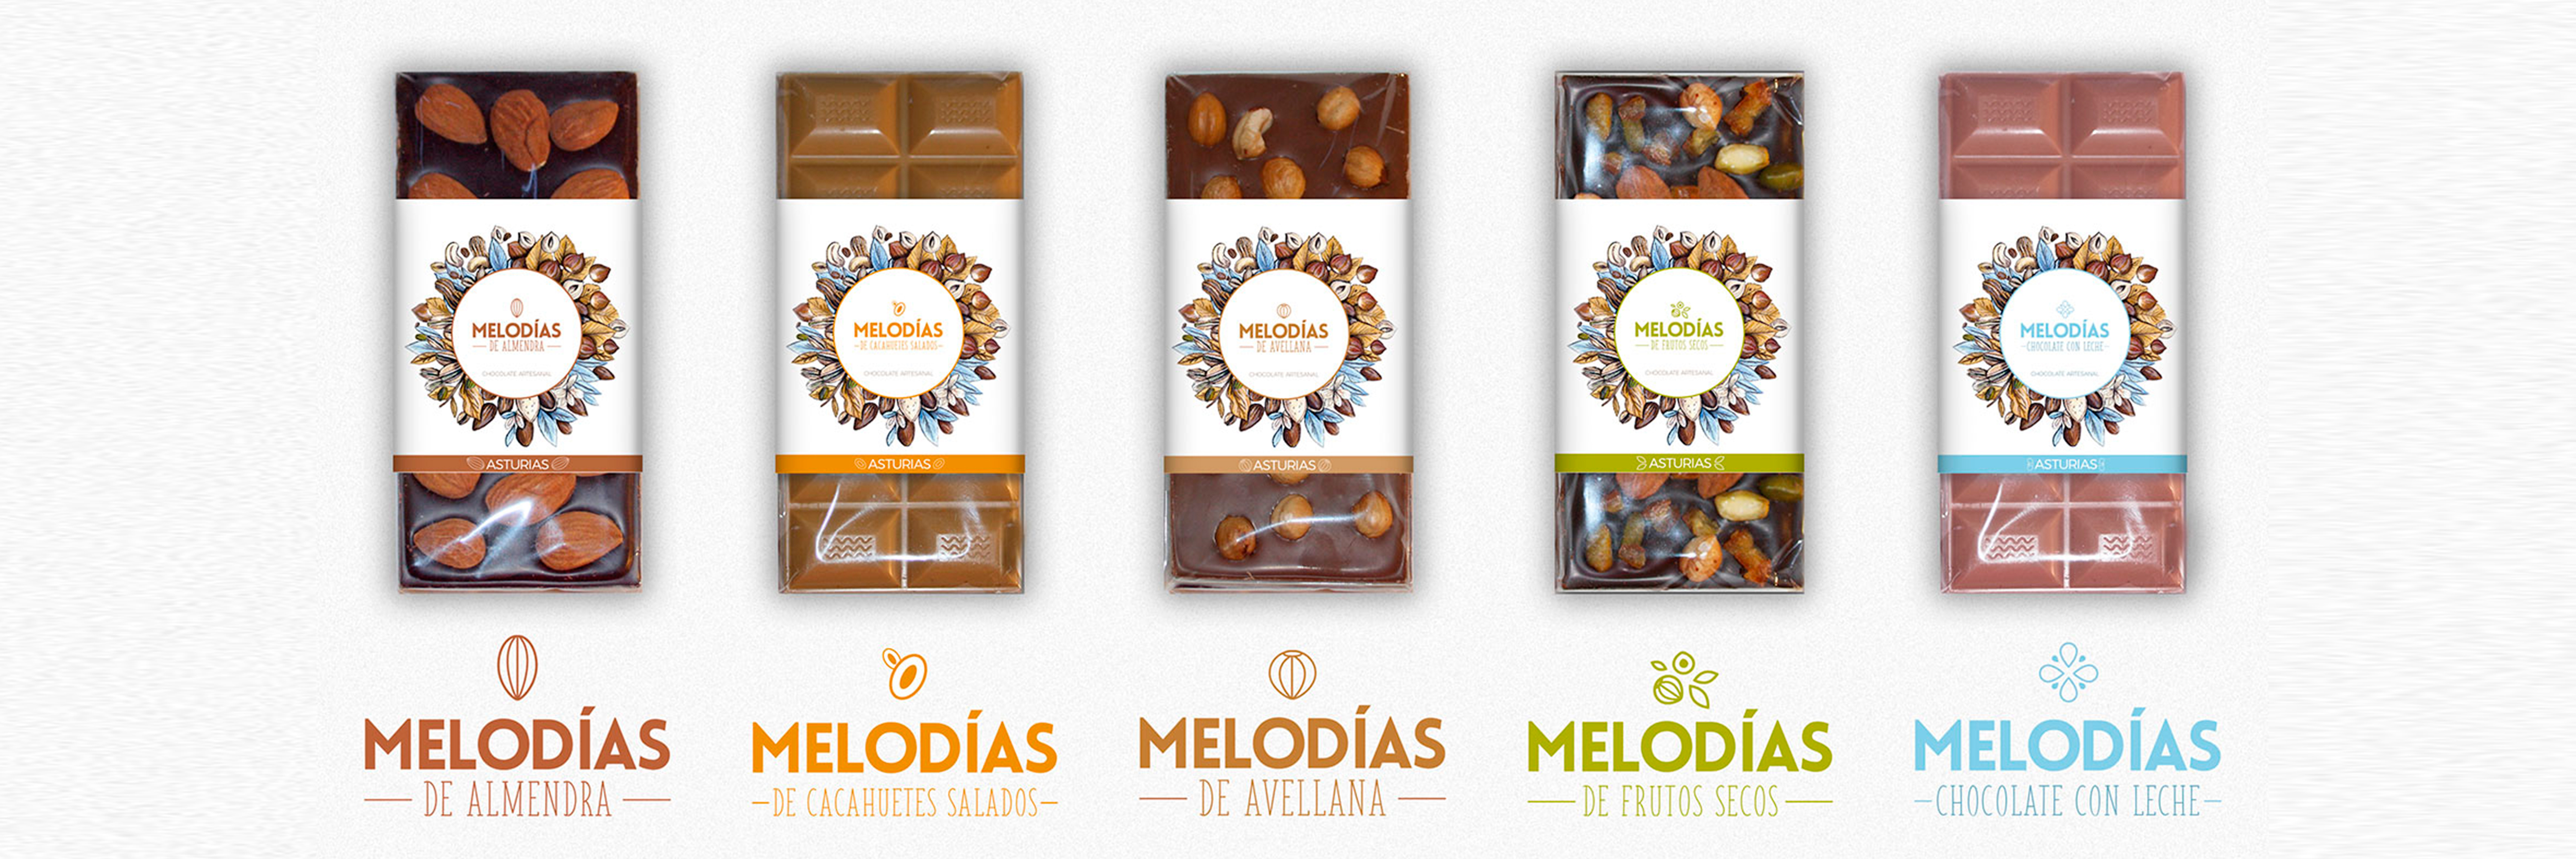 Chocolate label designs